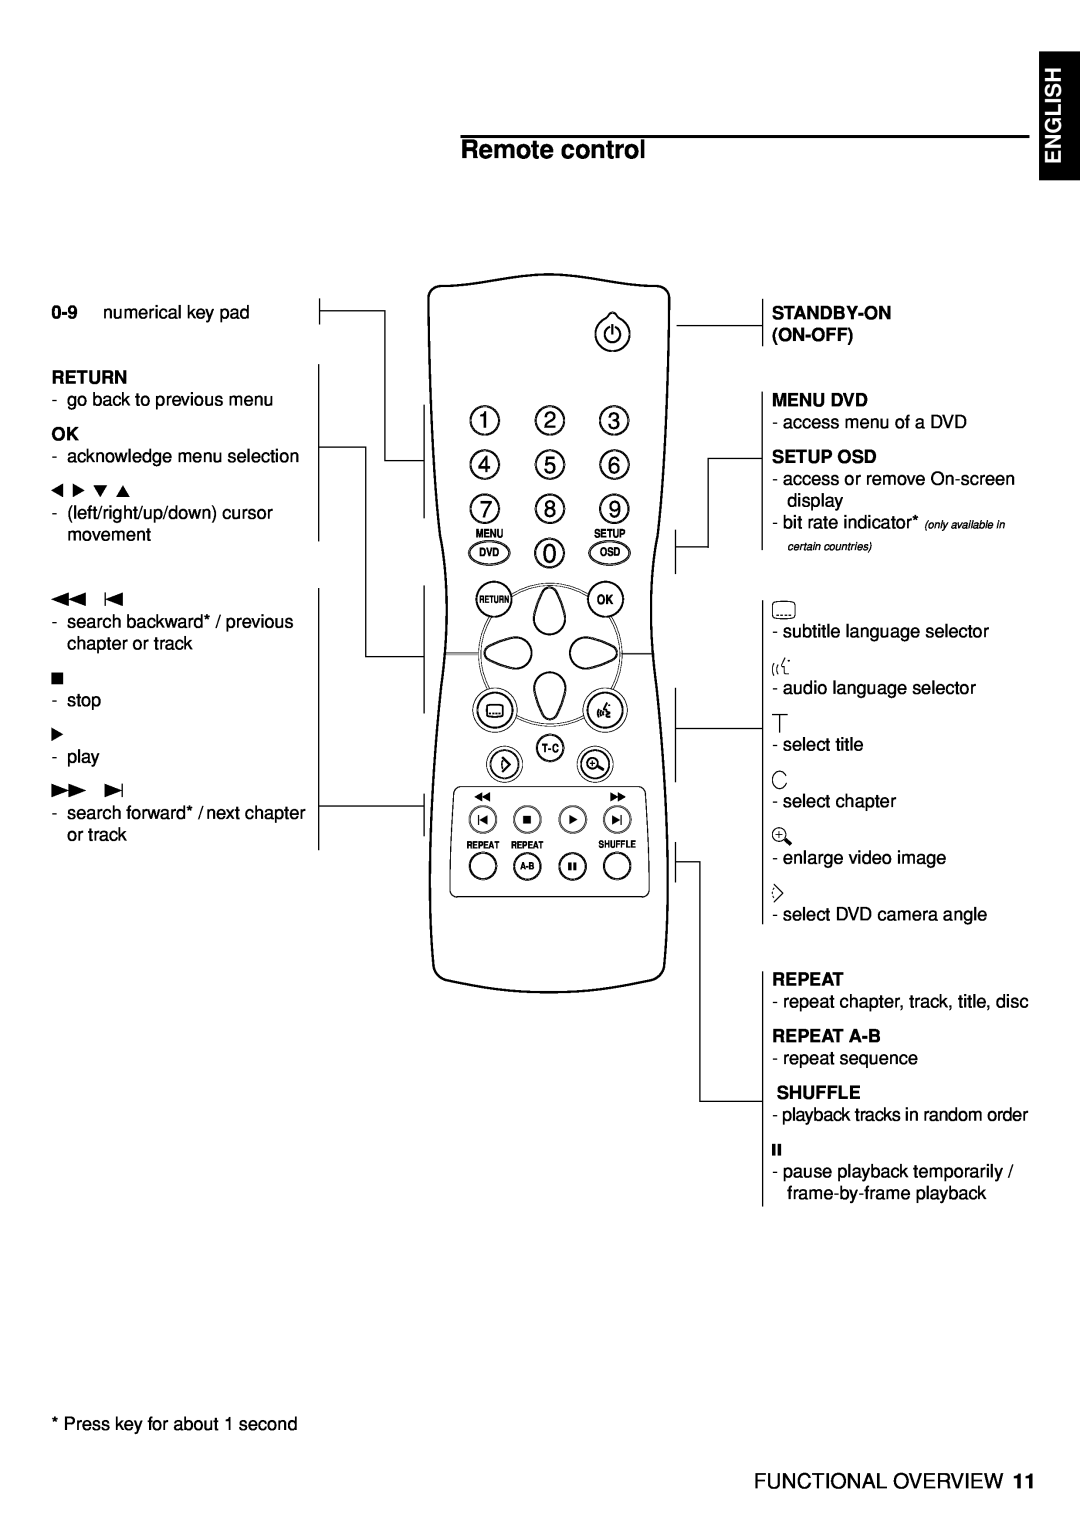 Marantz DV4100 manual Remote control, 1 2 4 5 7 8, English, Return, Standby-On On-Off Menu Dvd, Setup Osd, Repeat A-B 